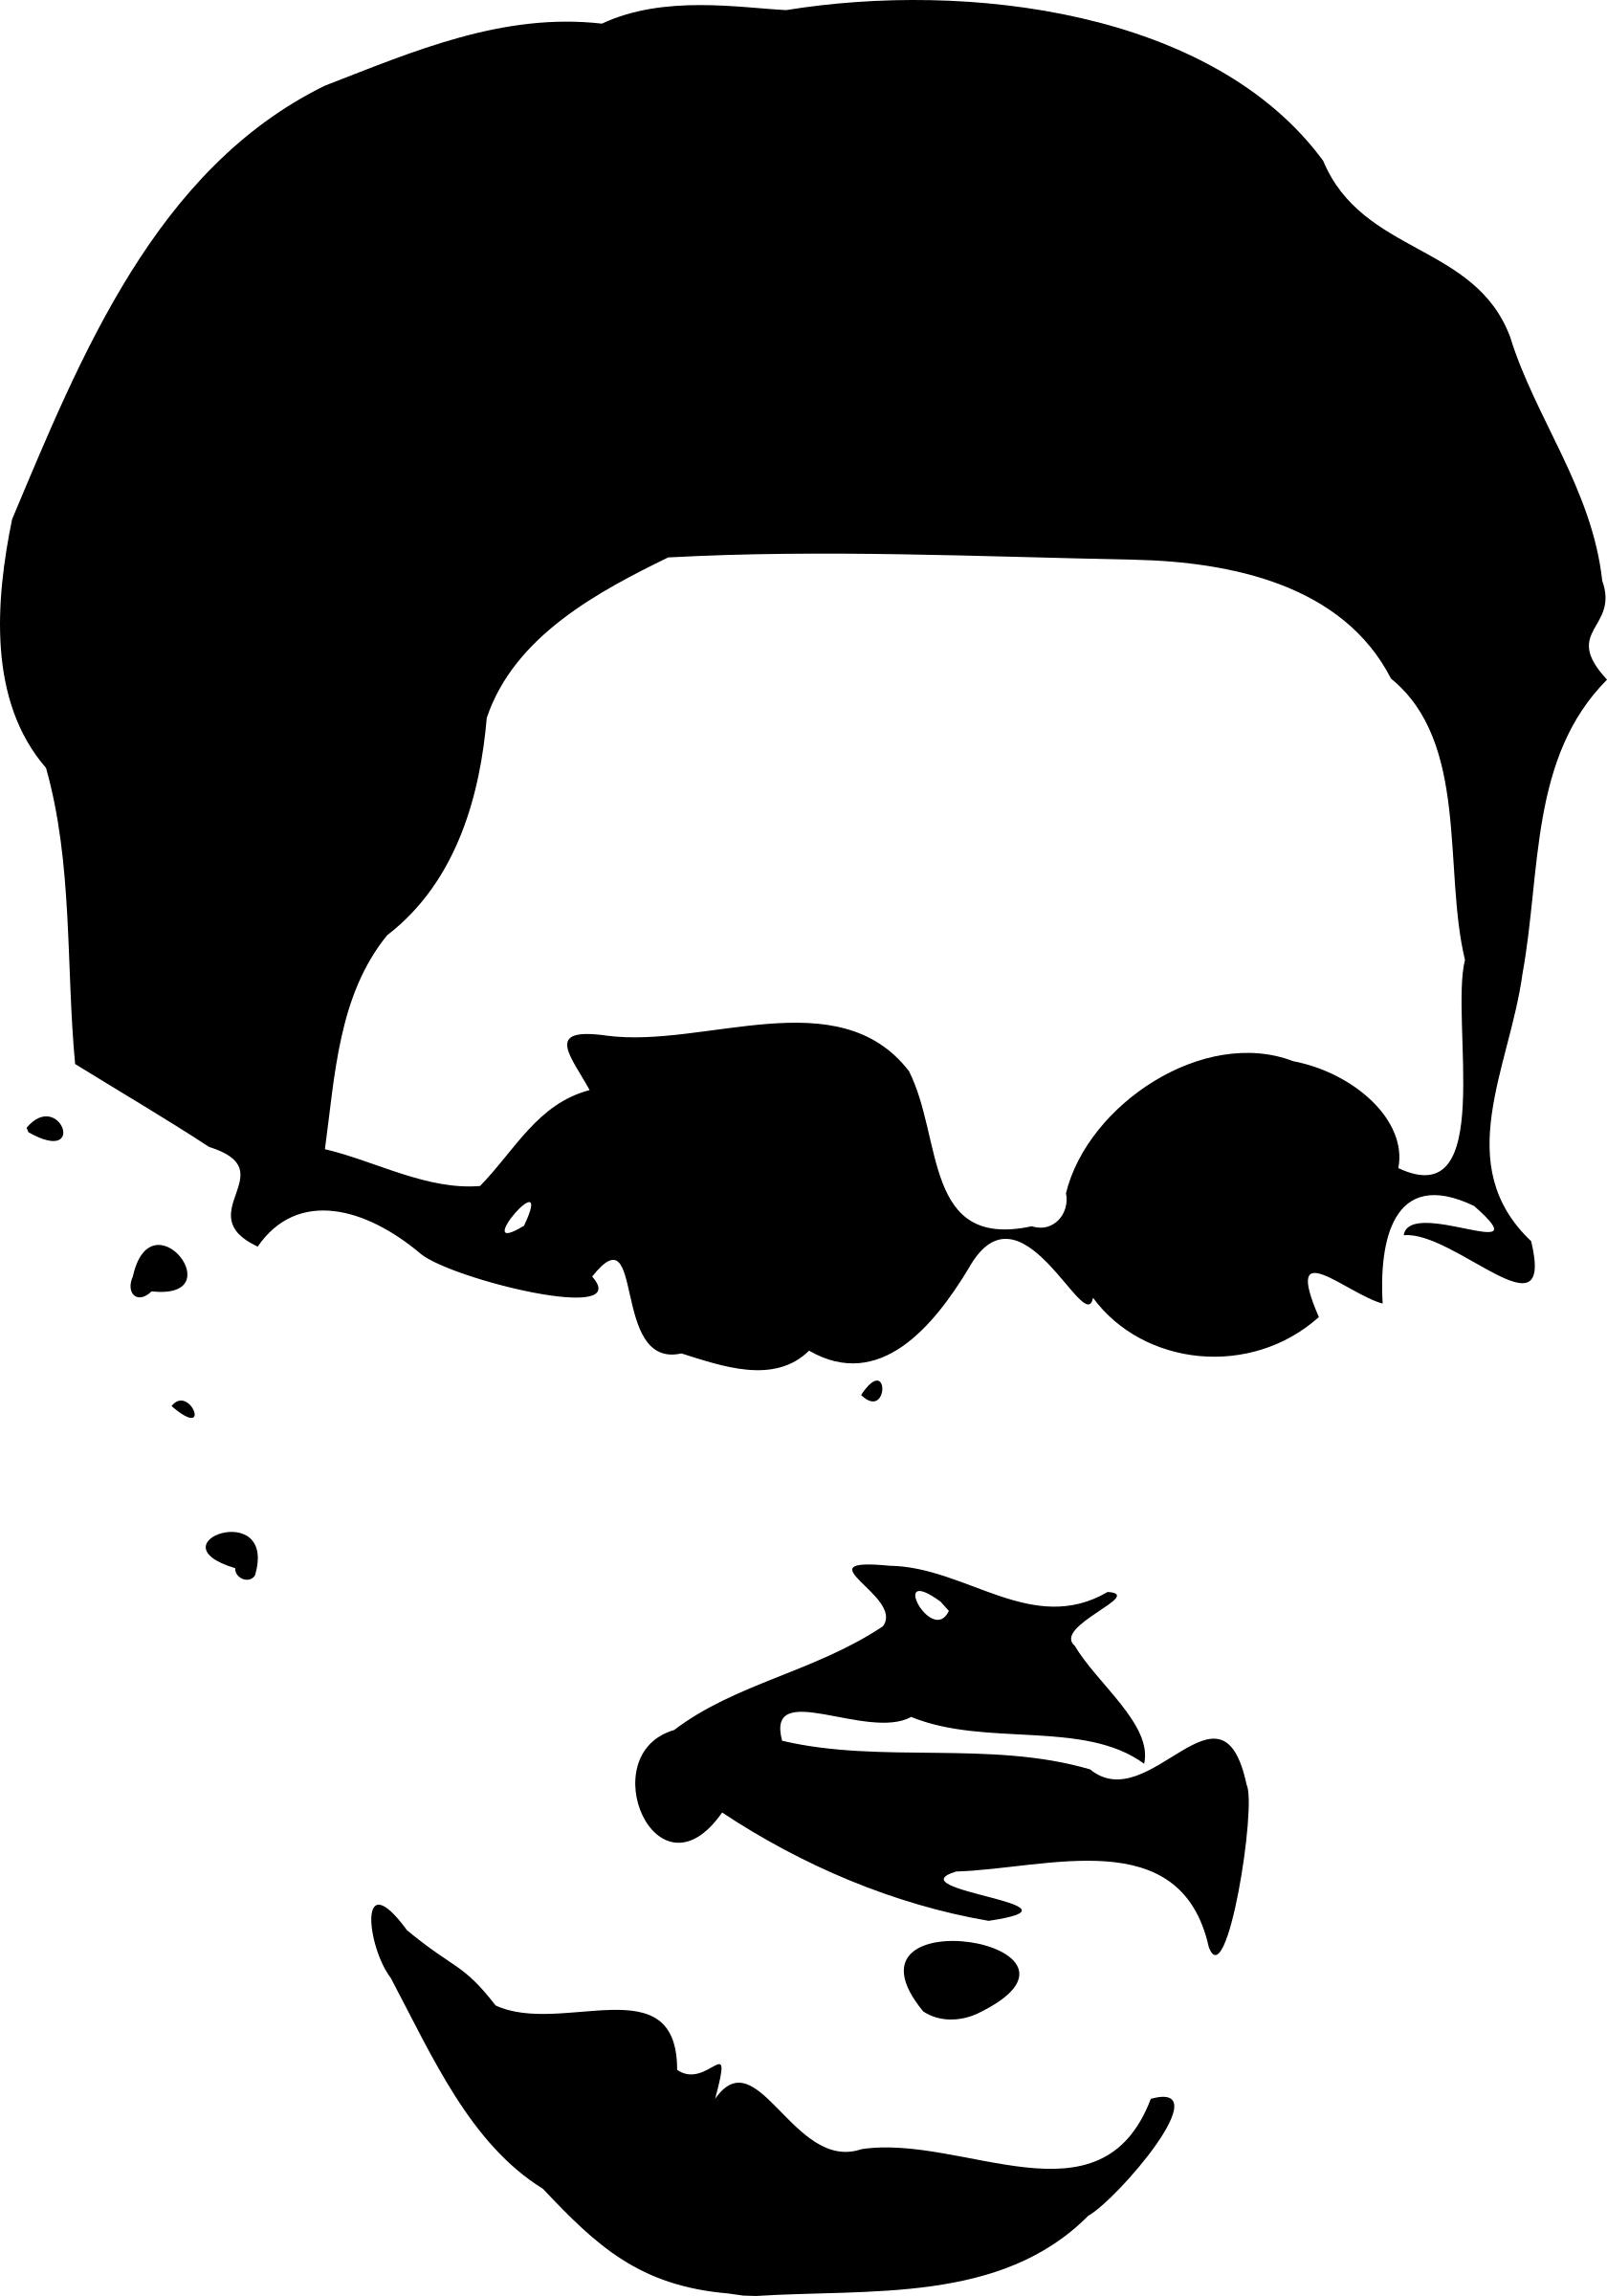 Snowden portrait bw png